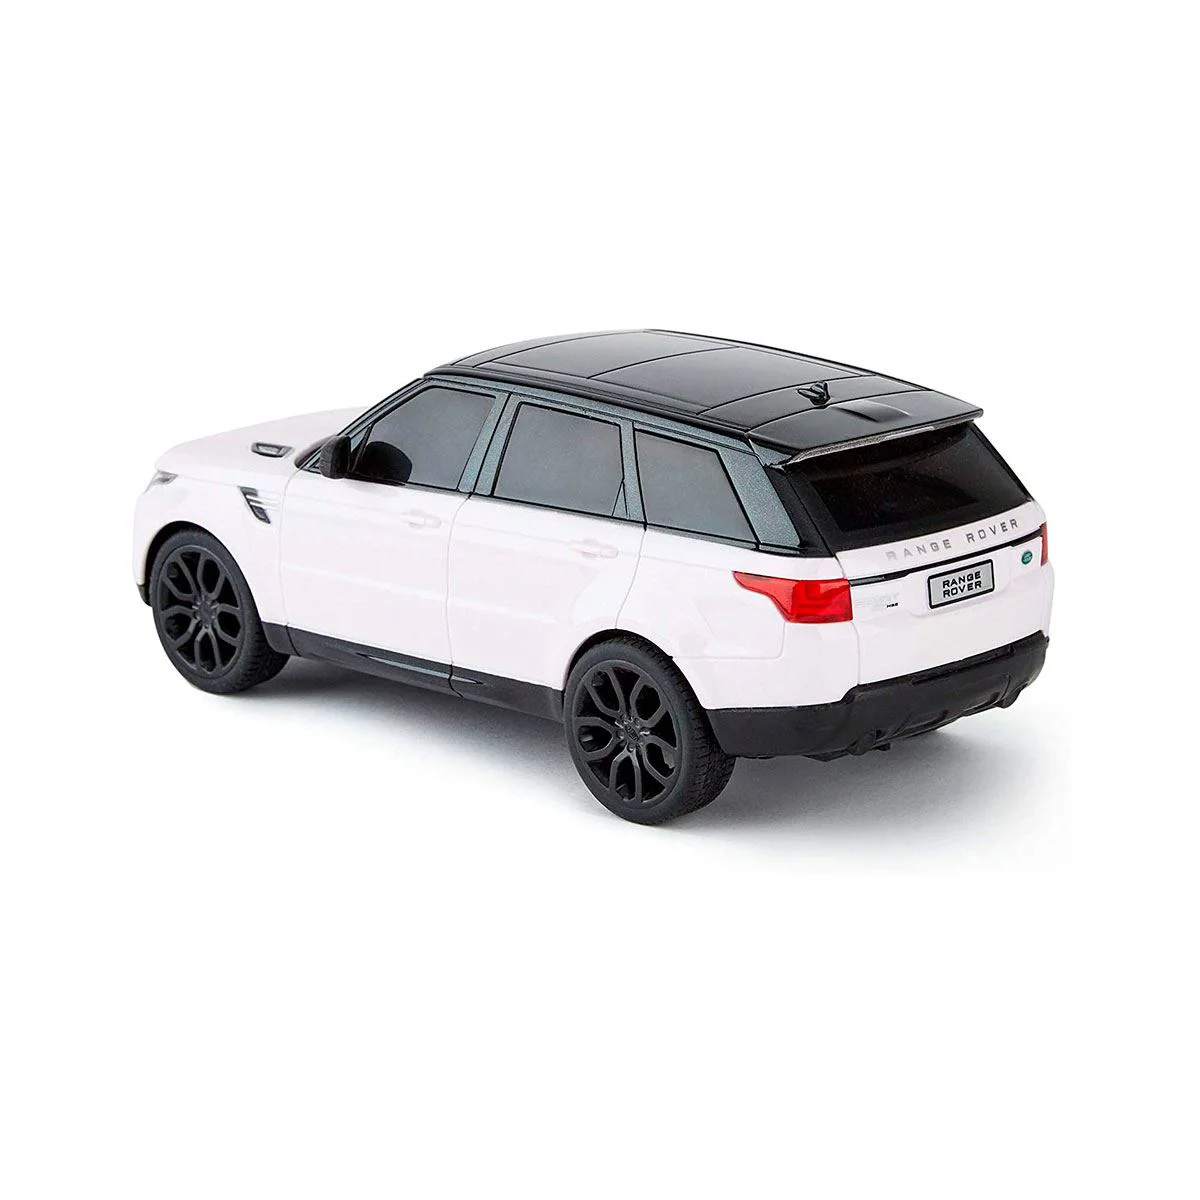 Masina cu telecomanda KS Drive - Land Rover Range Rover Sport (1:24, 2.4Ghz, alb)